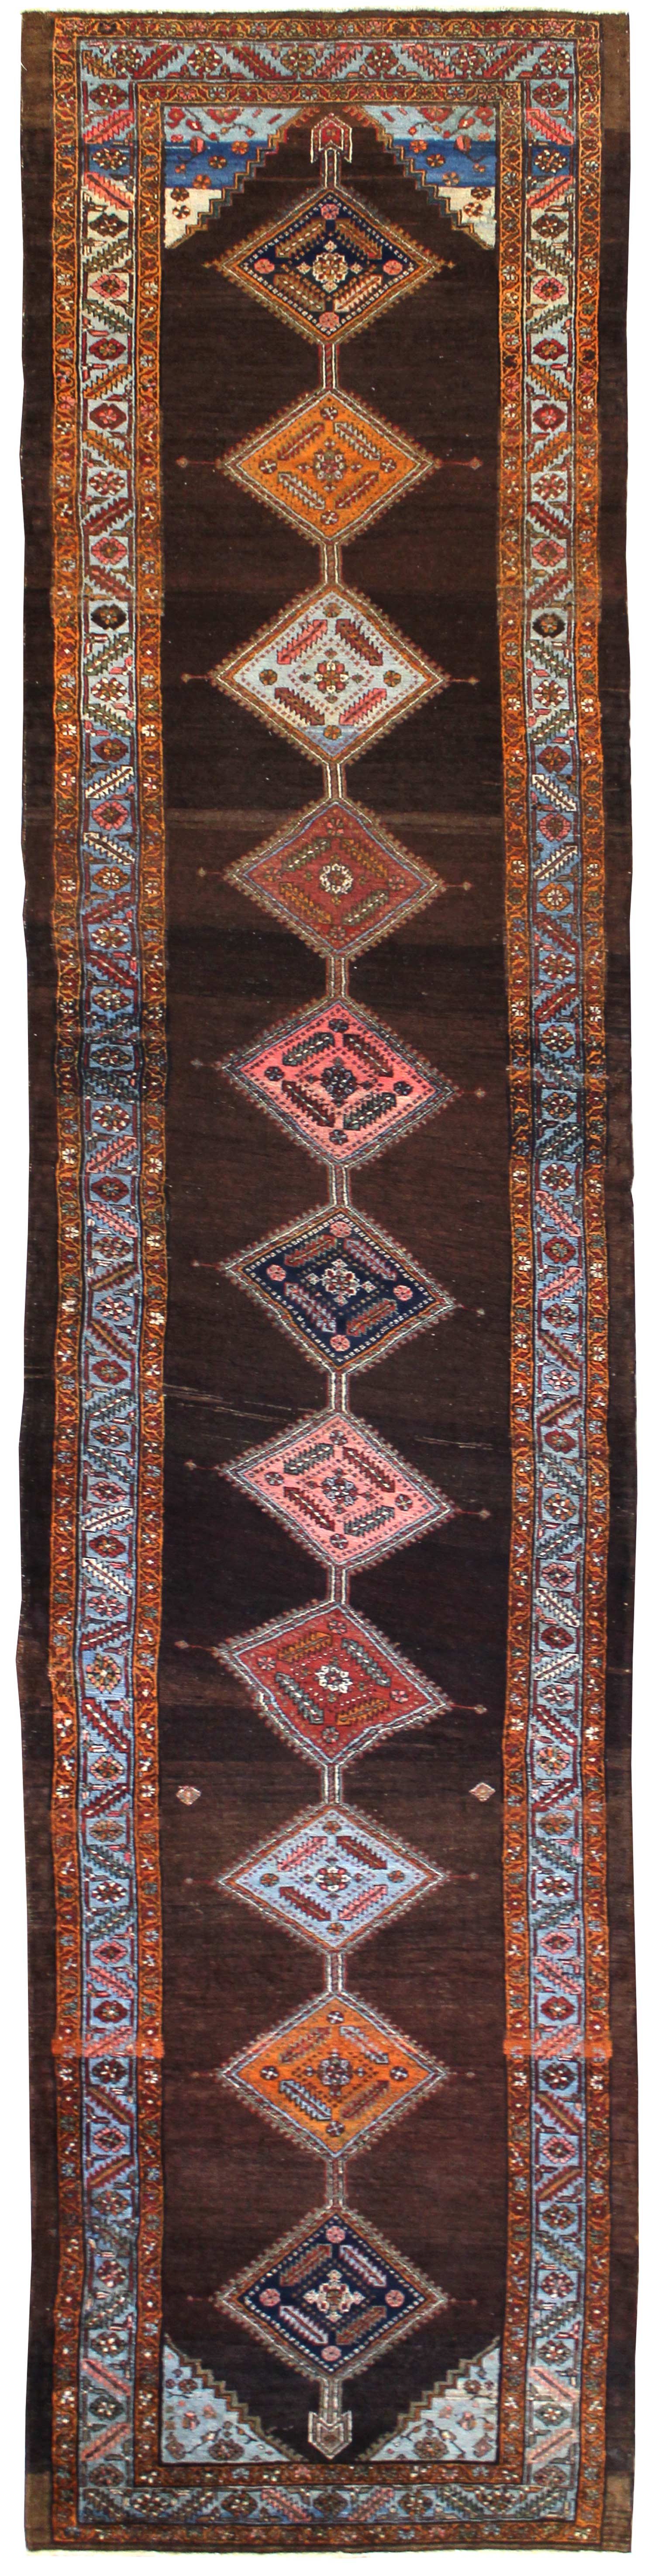 Antique Bakshaish Handwoven Tribal Rug